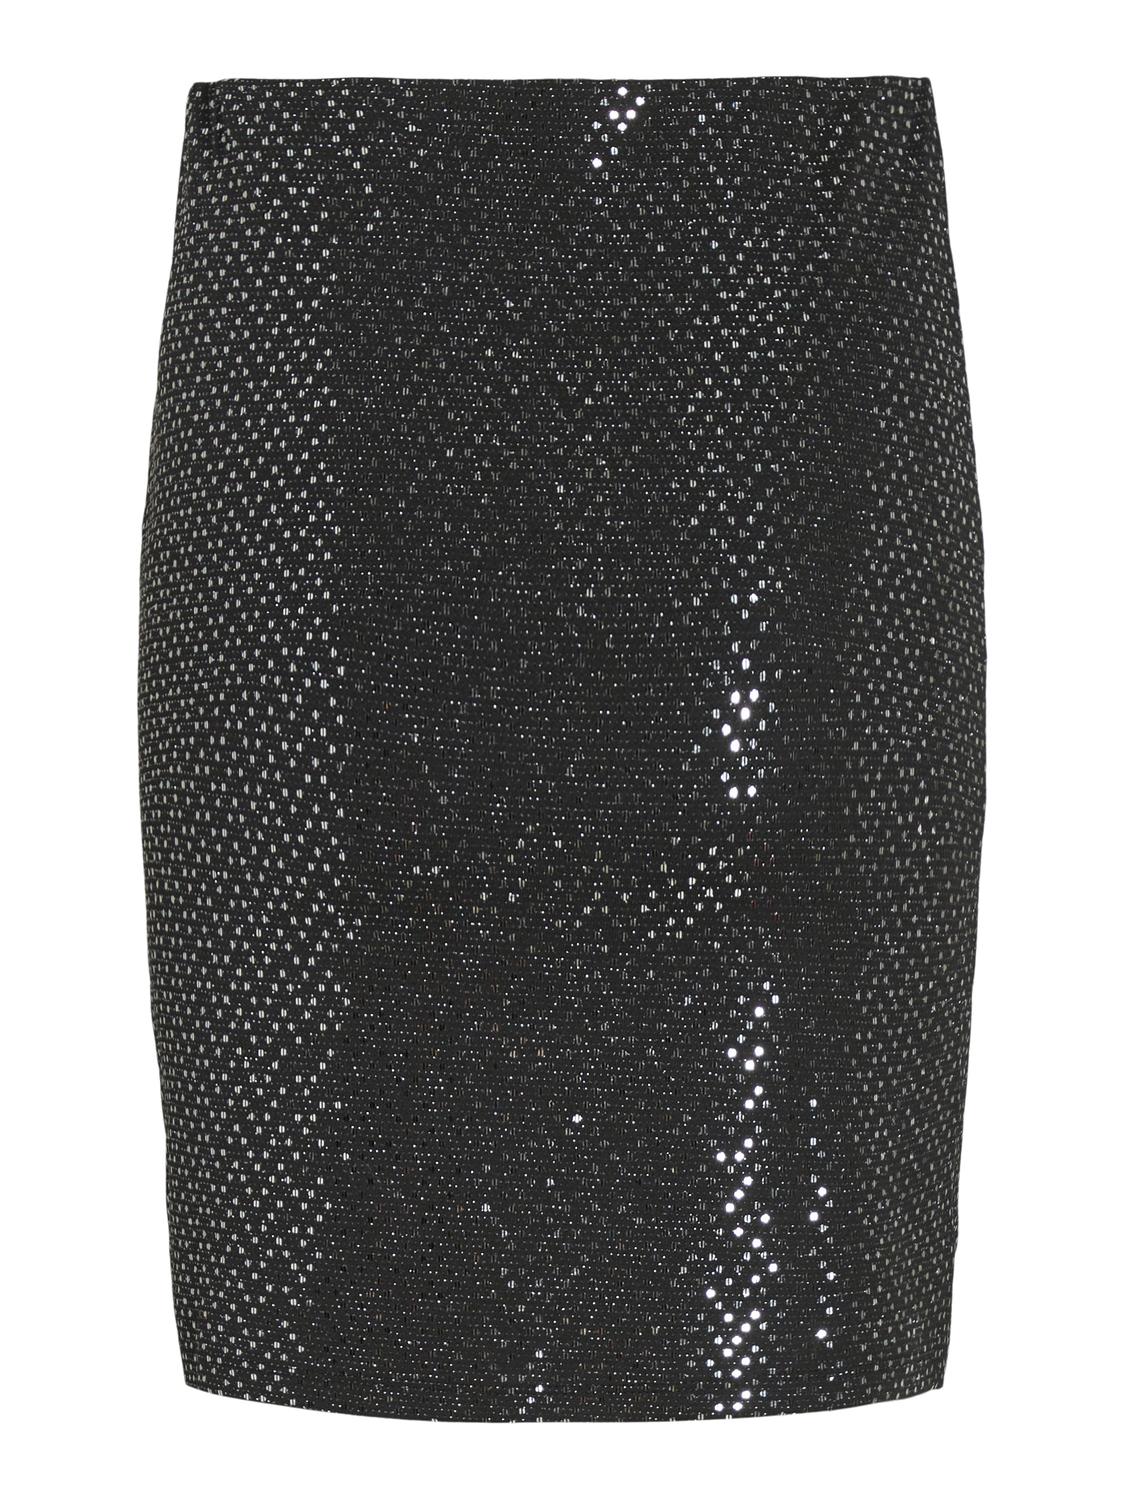 VIKALLA Skirt - Black